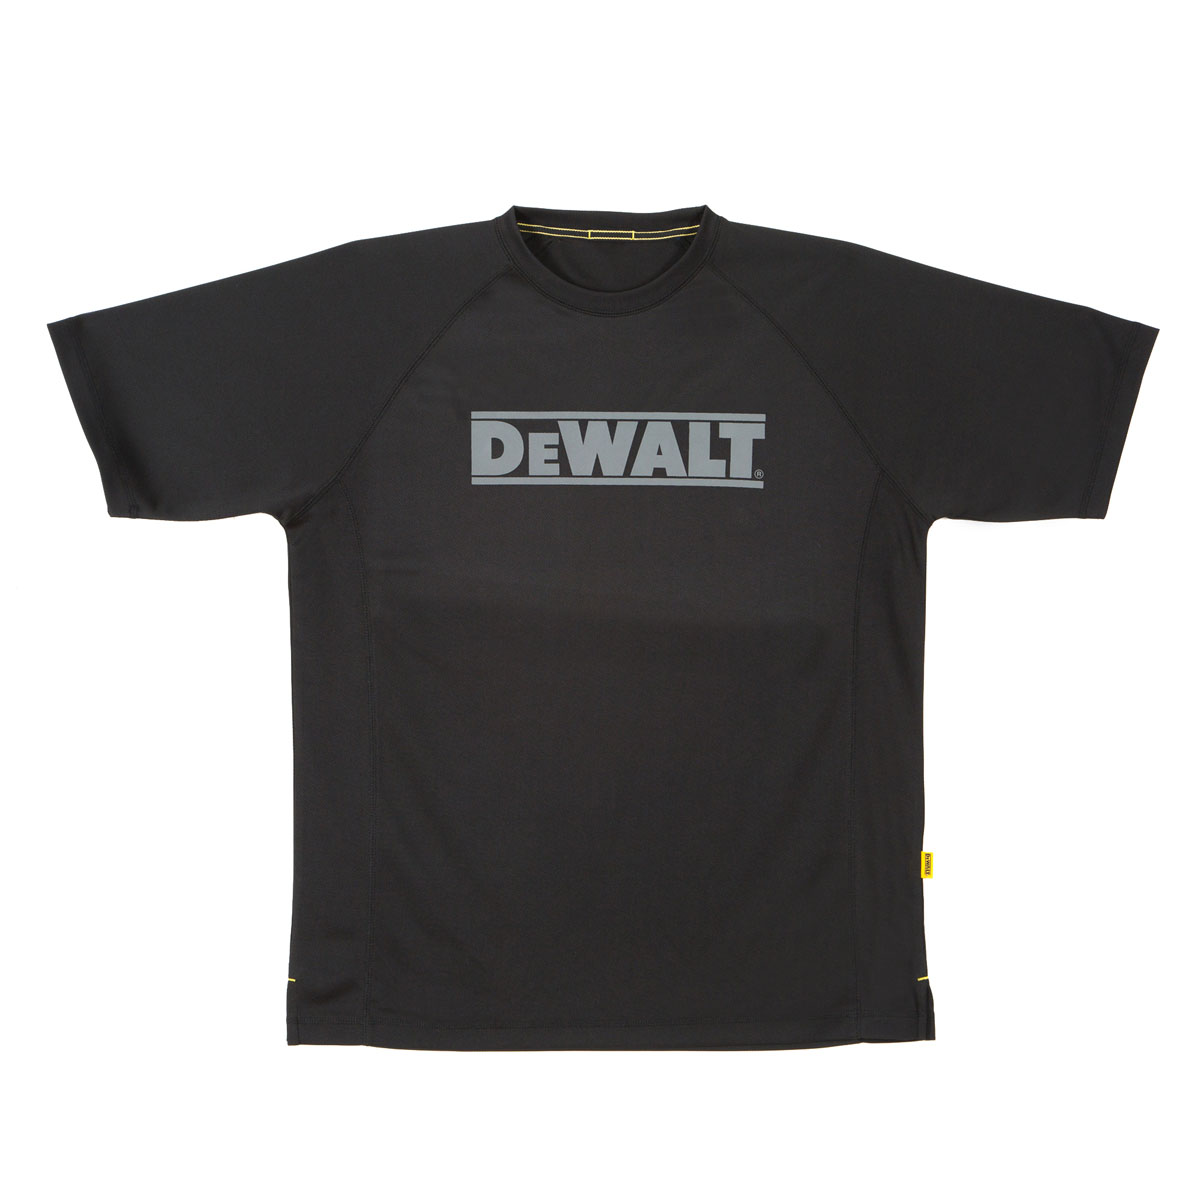 2  Dewalt Black Easton Soft Feel Performance Vented T-Shirt Big Logo Sz M-XXL 